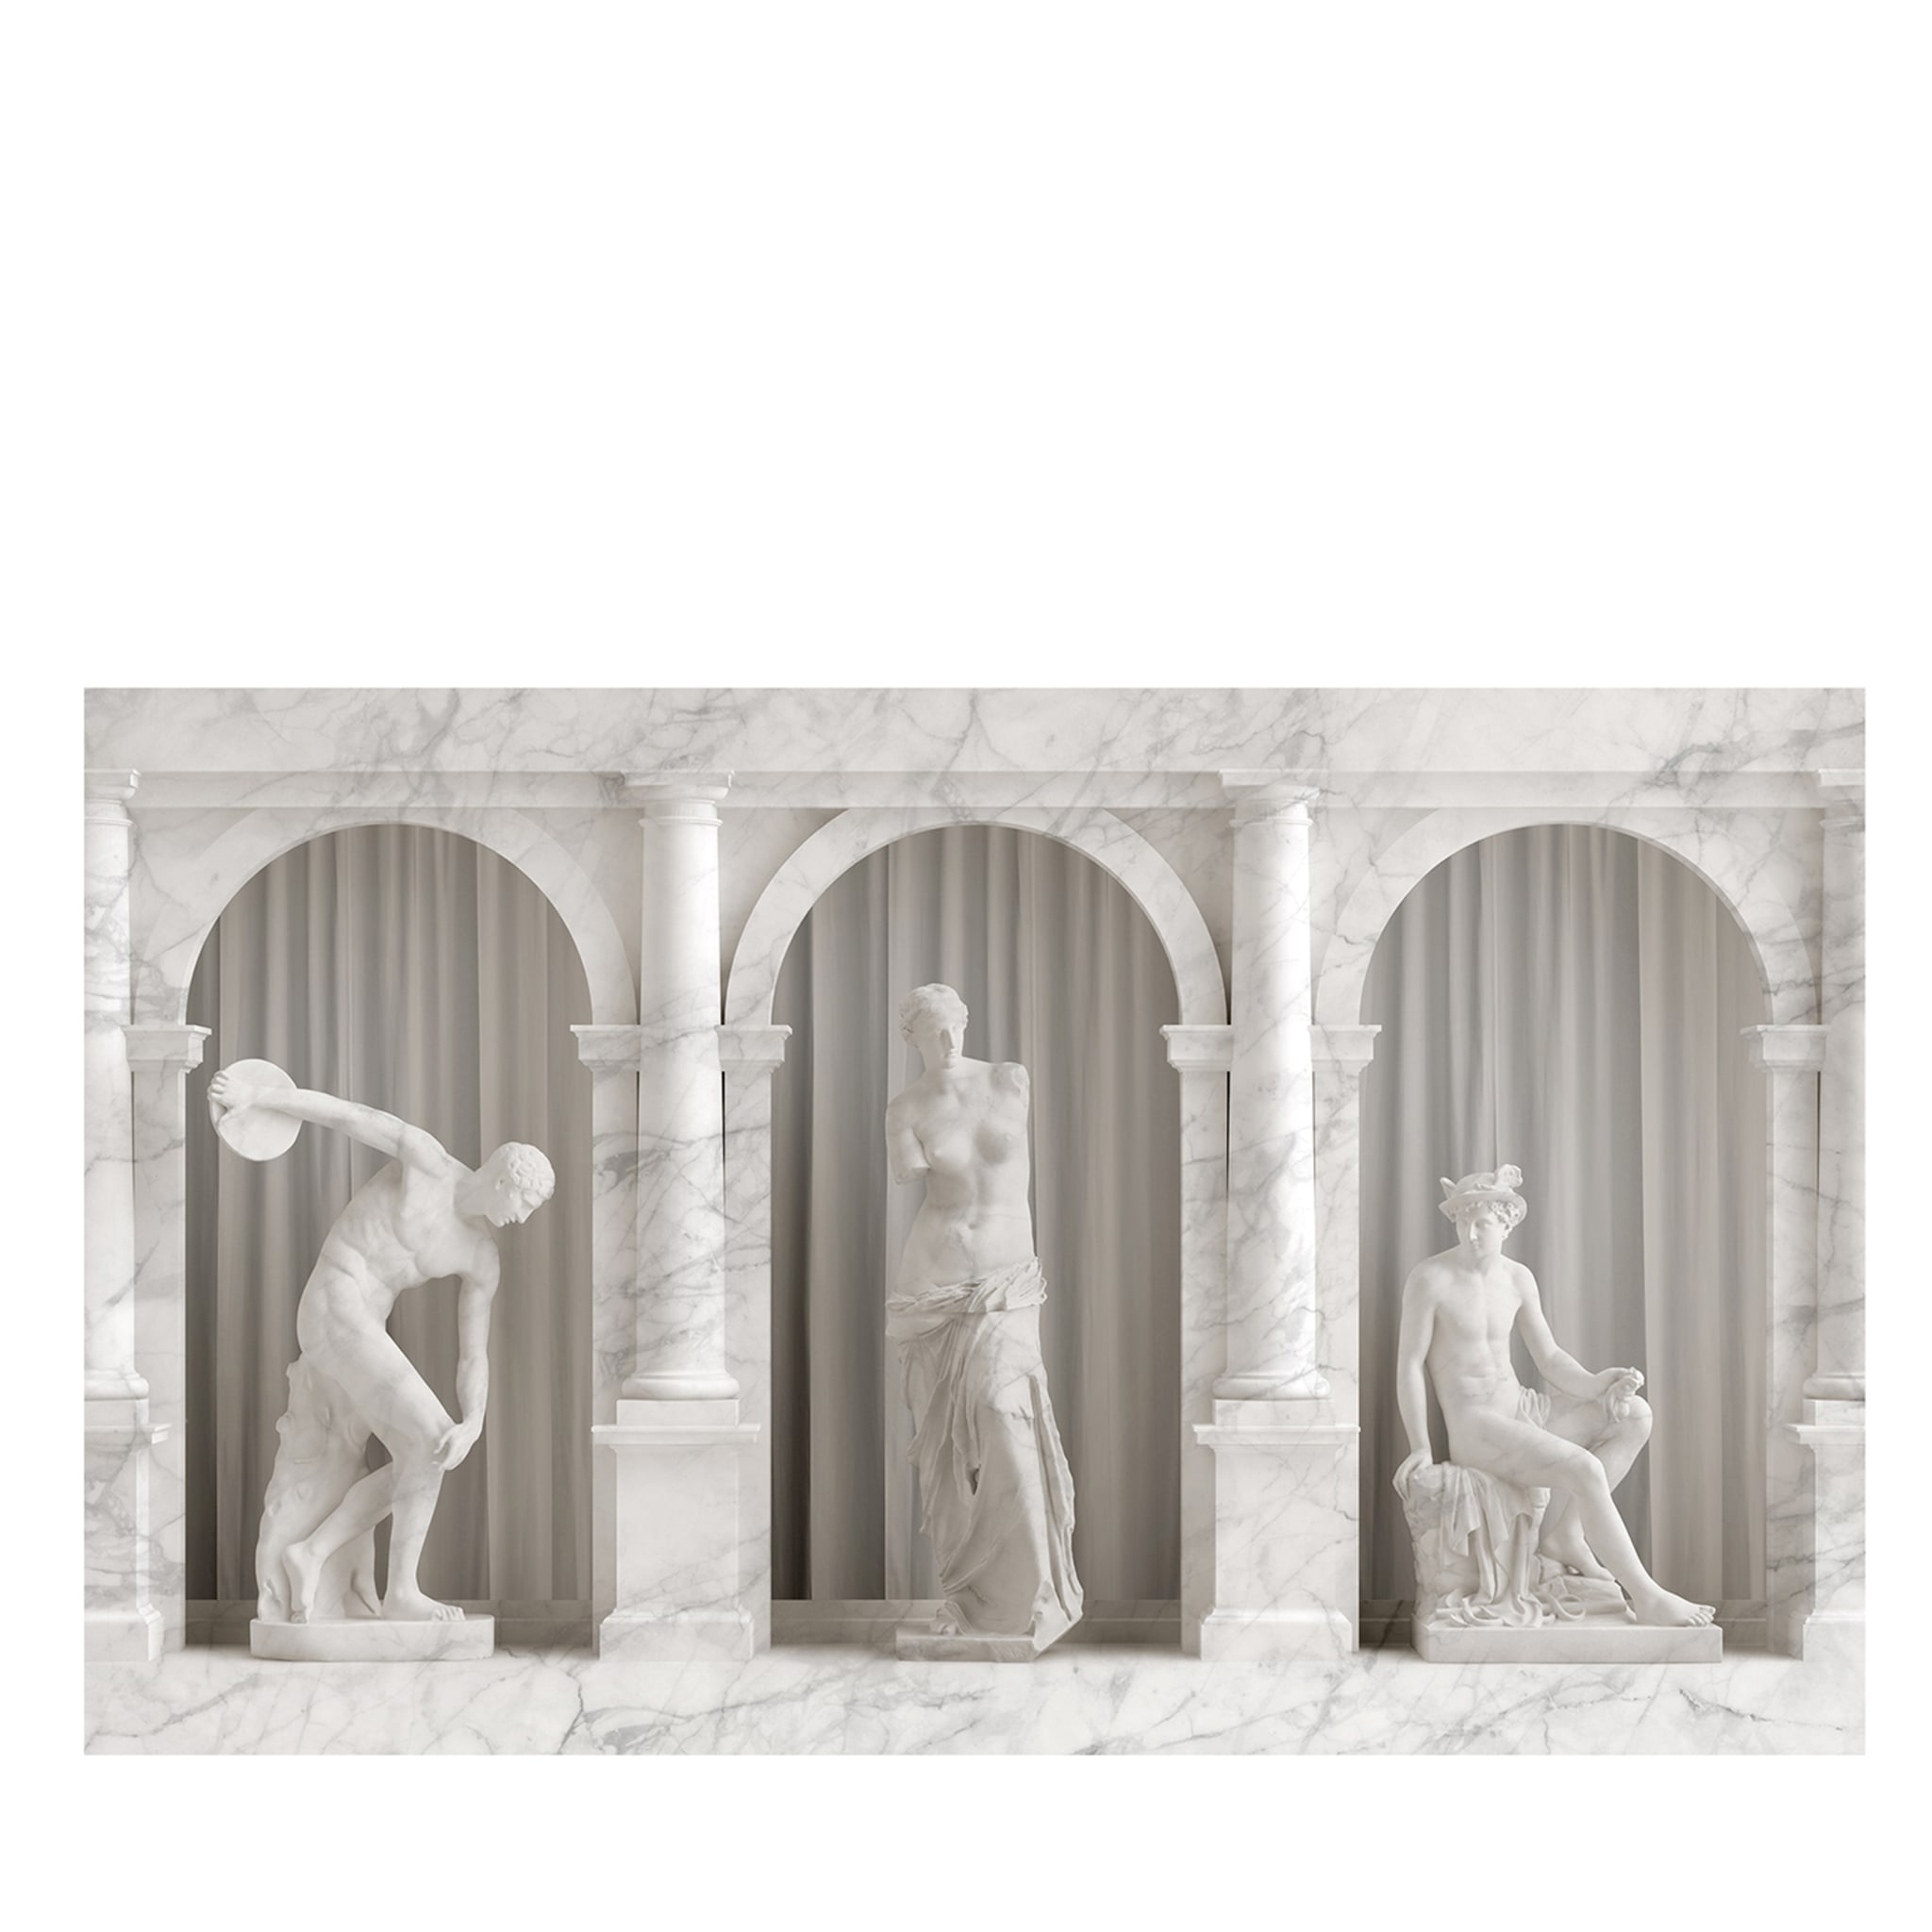 Carrara marble statues textured wallpaper - Main view